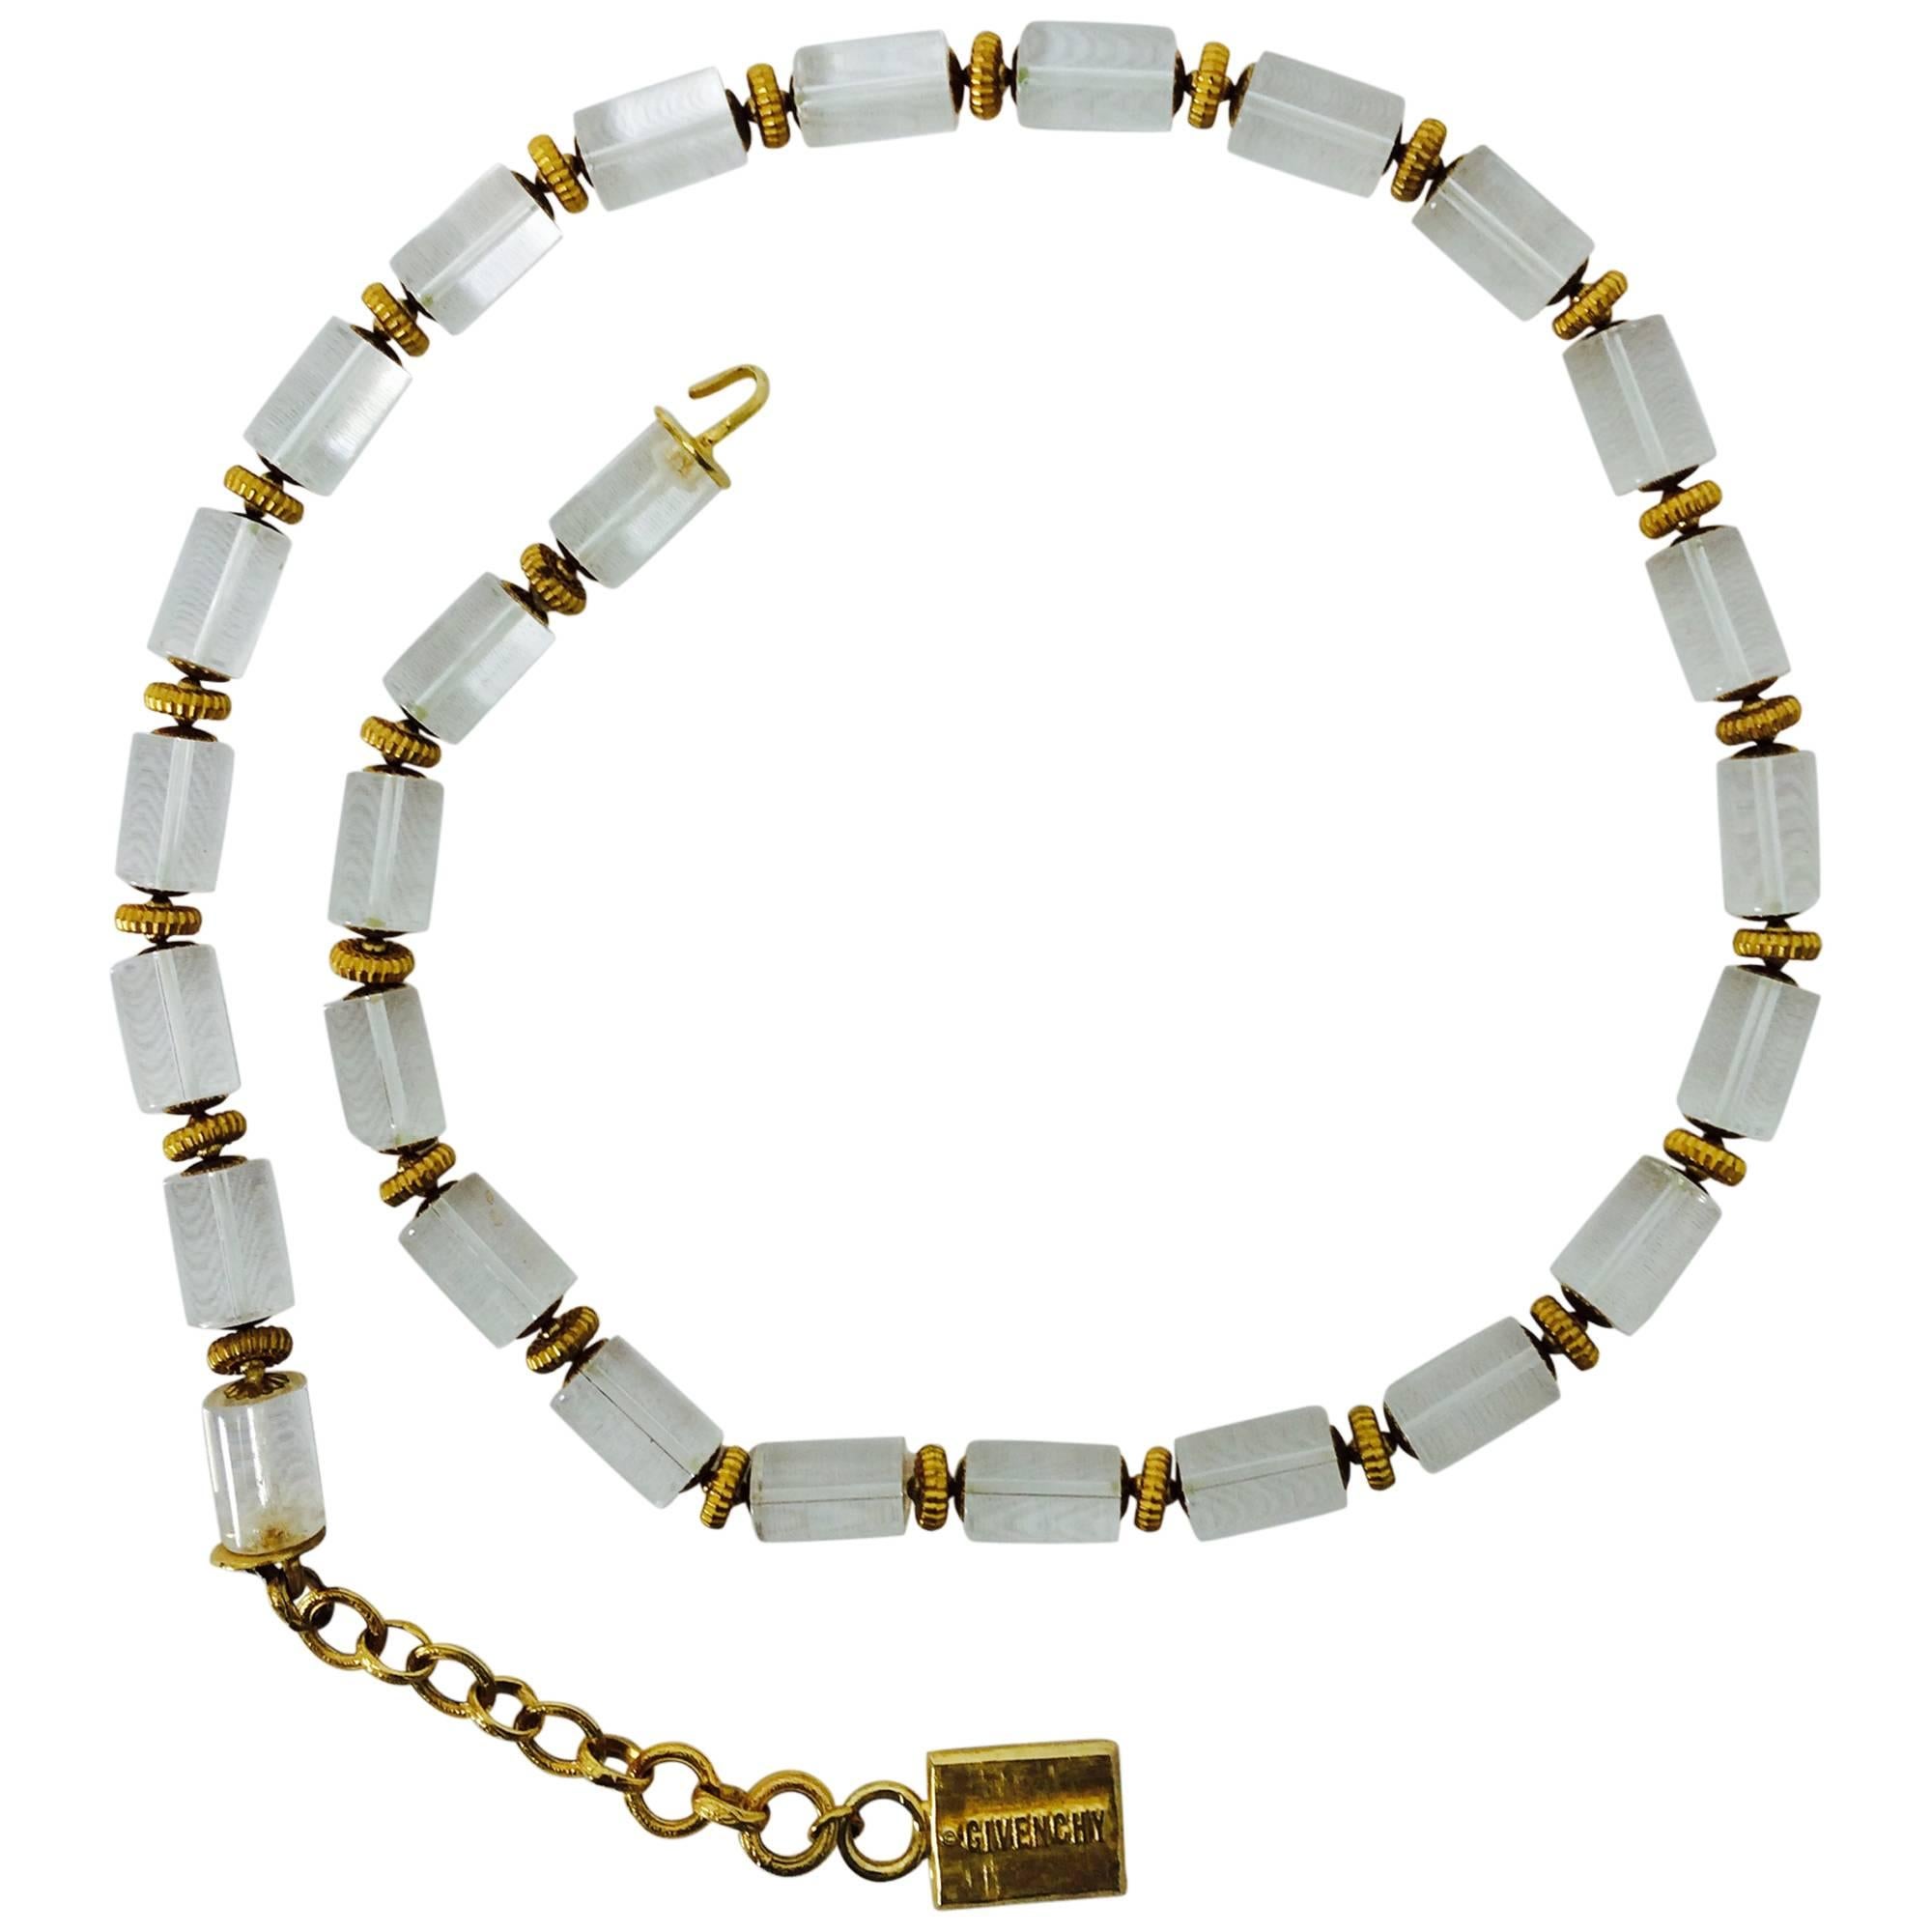 Givenchy Lucite & Gold Metall-Halskette oder Gürtel 1970er Jahre